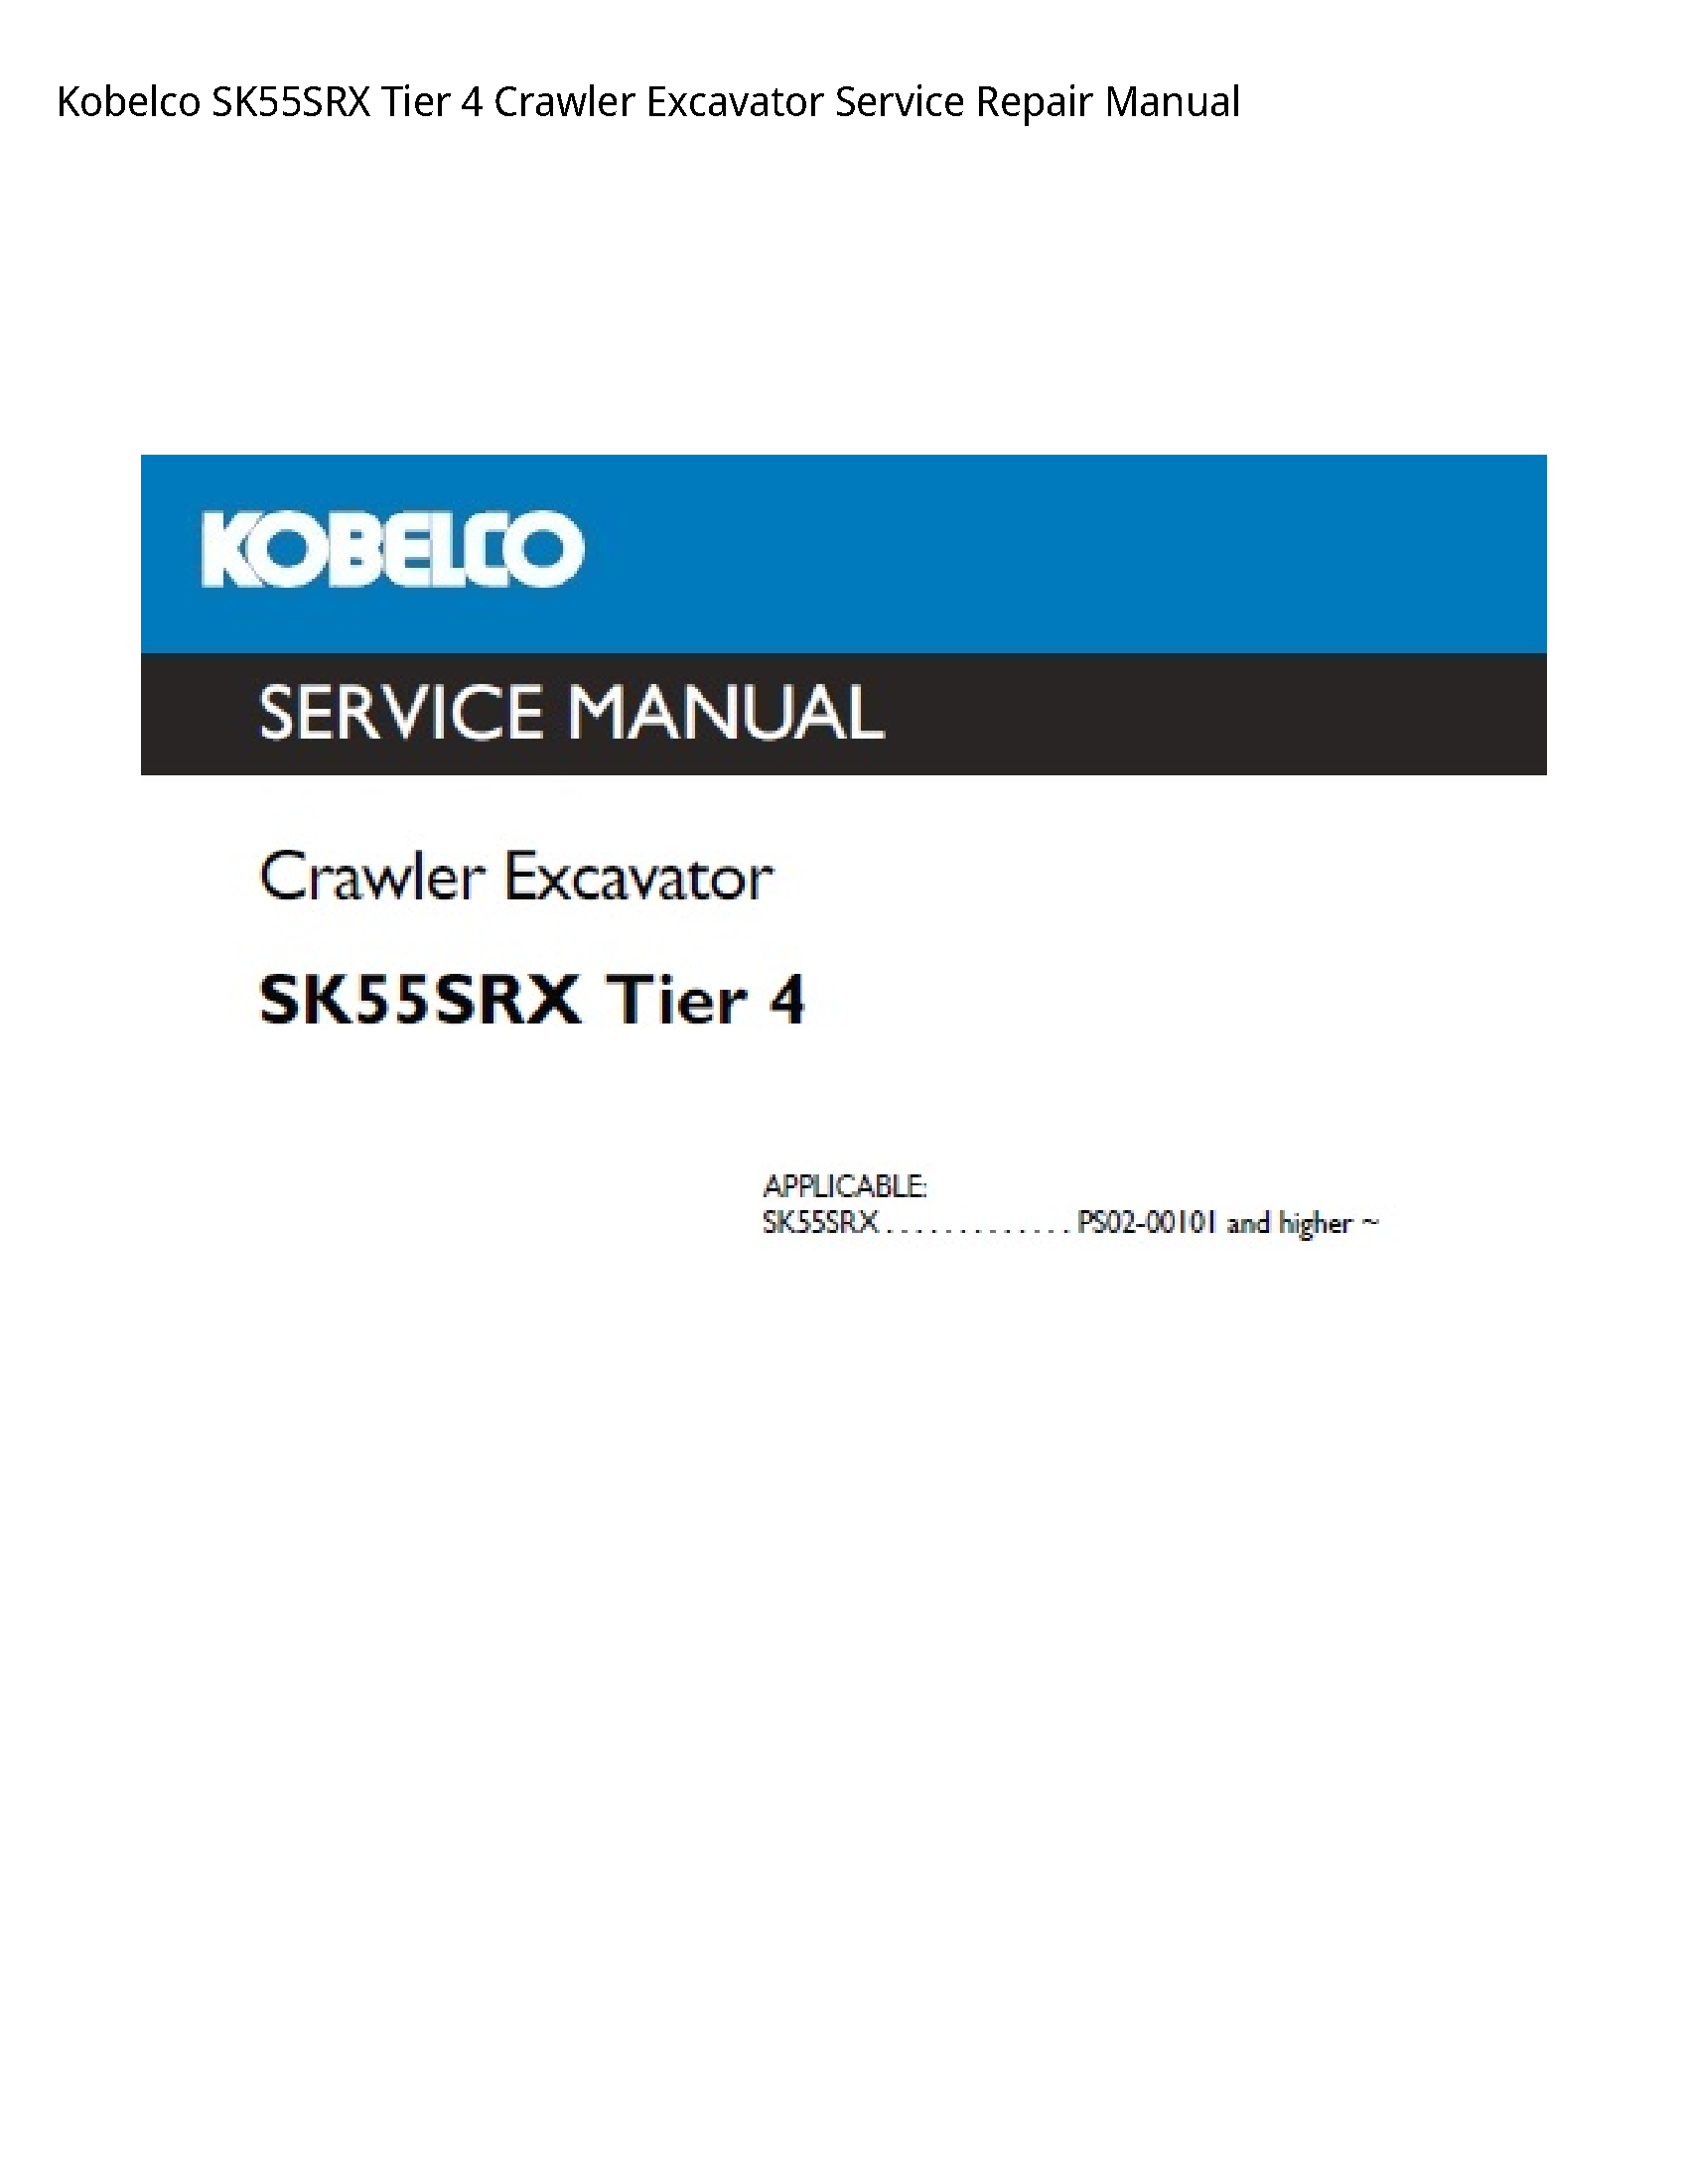 Kobelco SK55SRX Tier Crawler Excavator manual